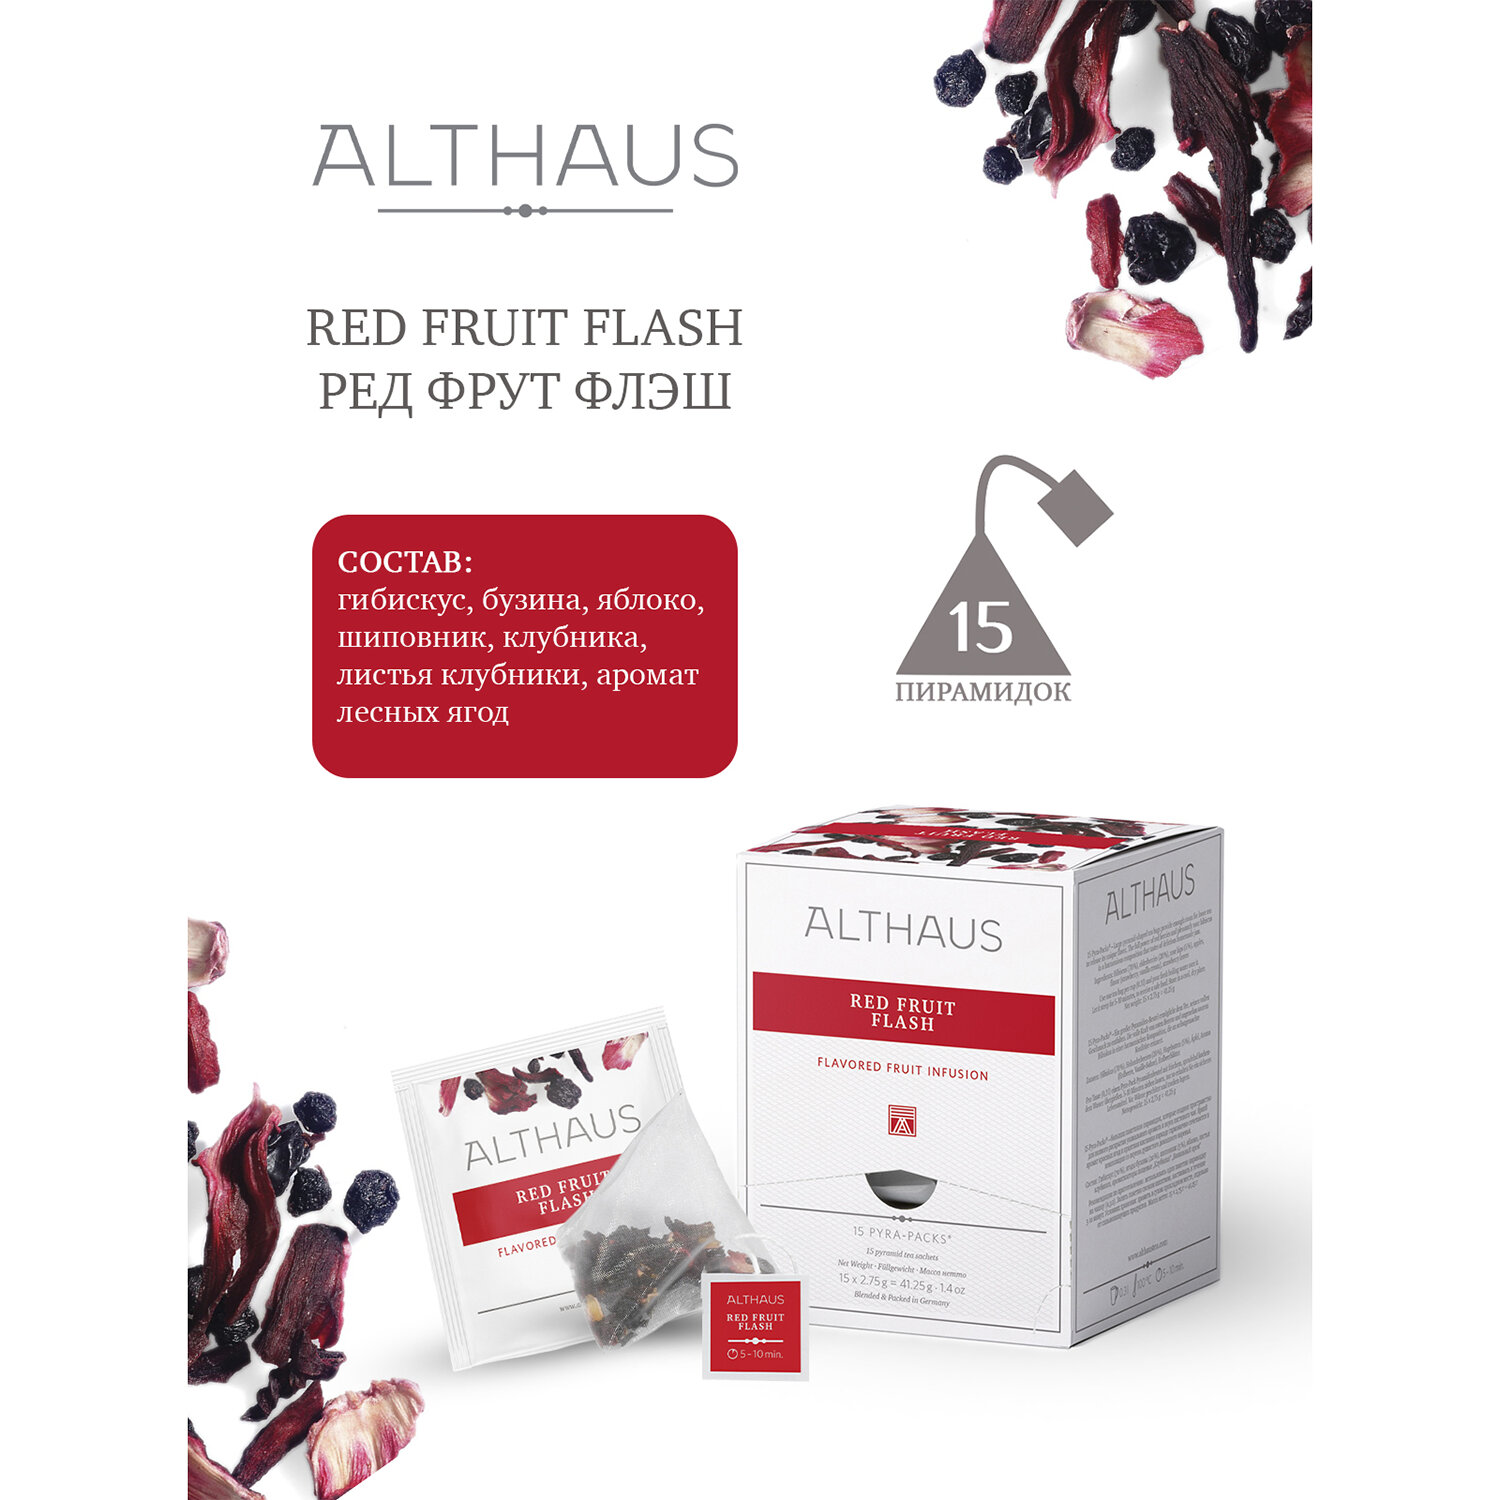 ALTHAUS  ALTHAUS TALTHL-P00010 Red Fruit Flash, , 15   2,75 